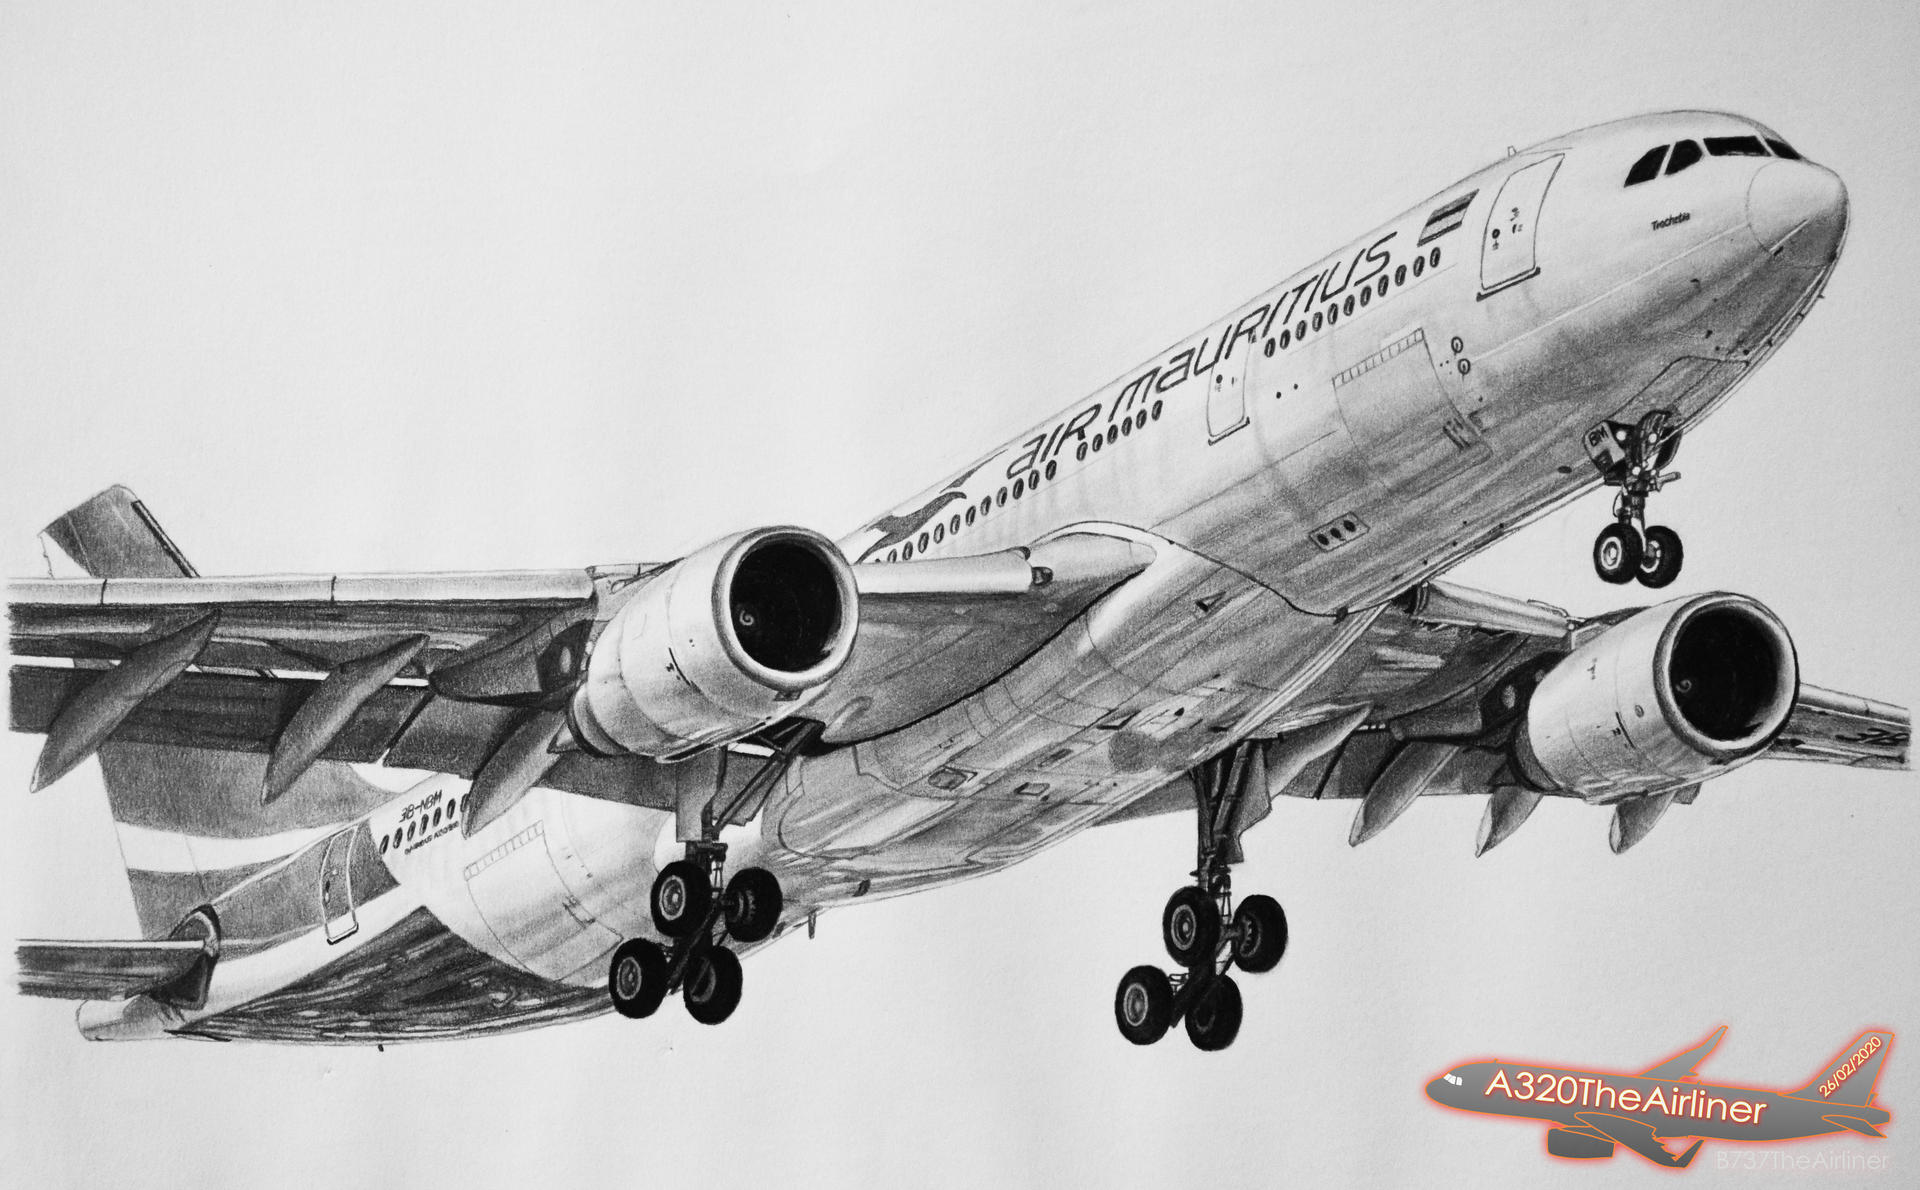 Air Mauritius Airbus A330-200 - Pencil Drawing by Pinniplane on DeviantArt